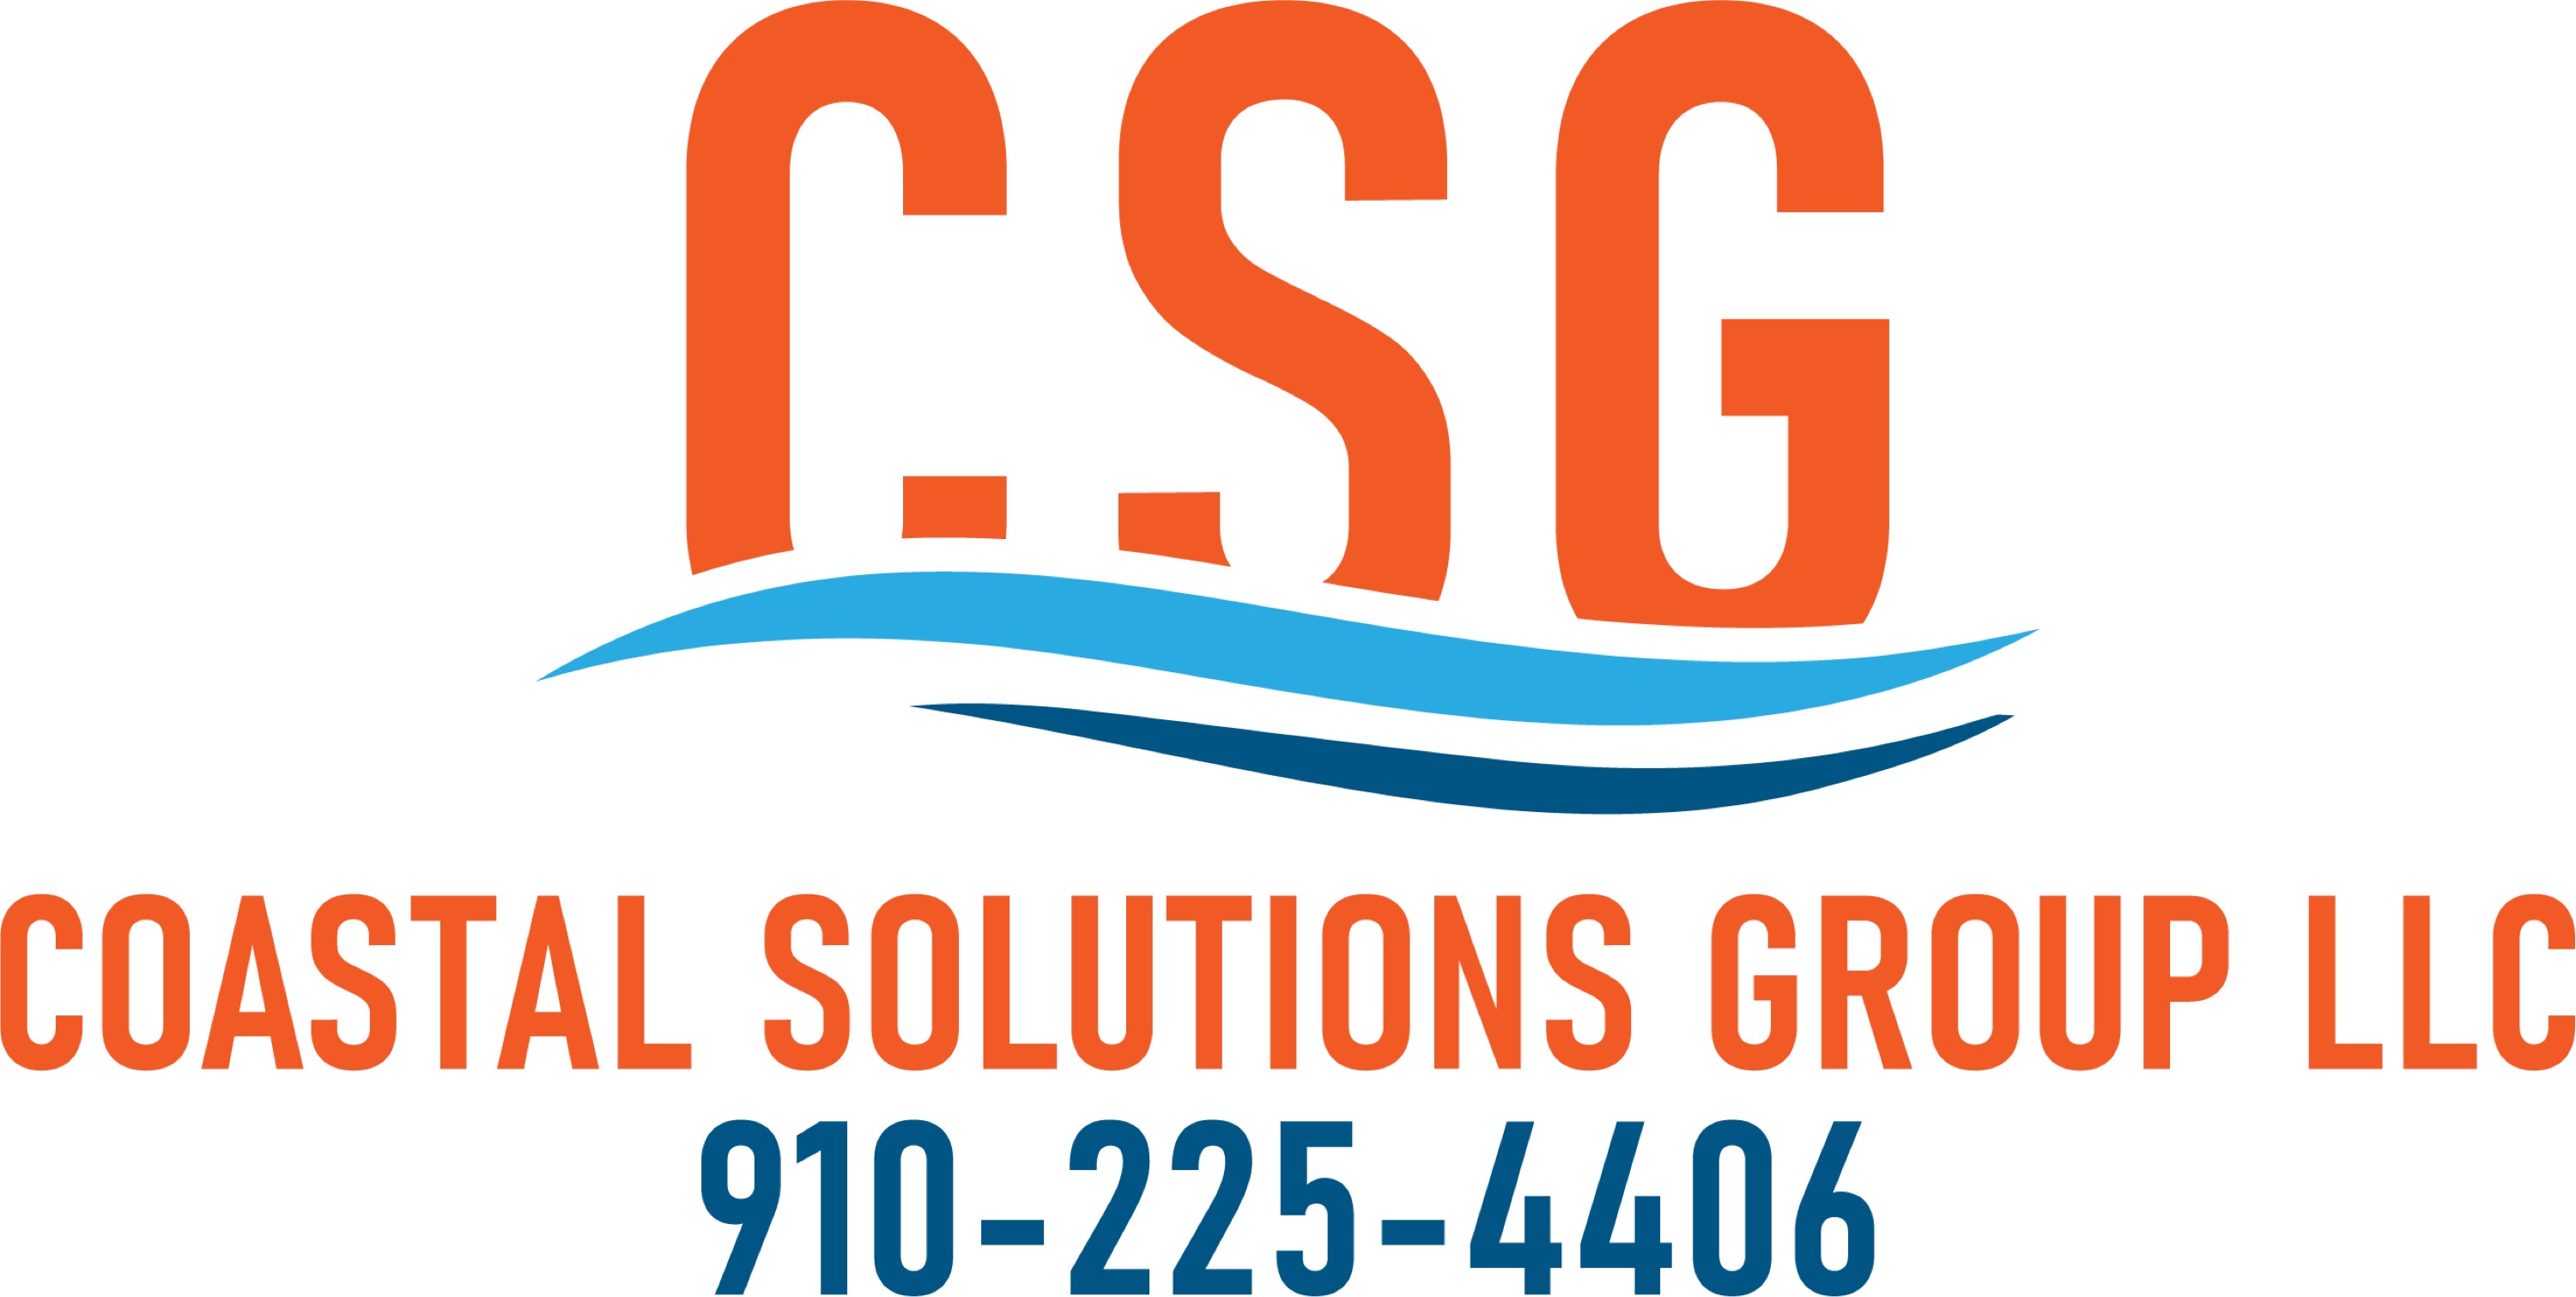 Coastal Solutions Group LLC Logo